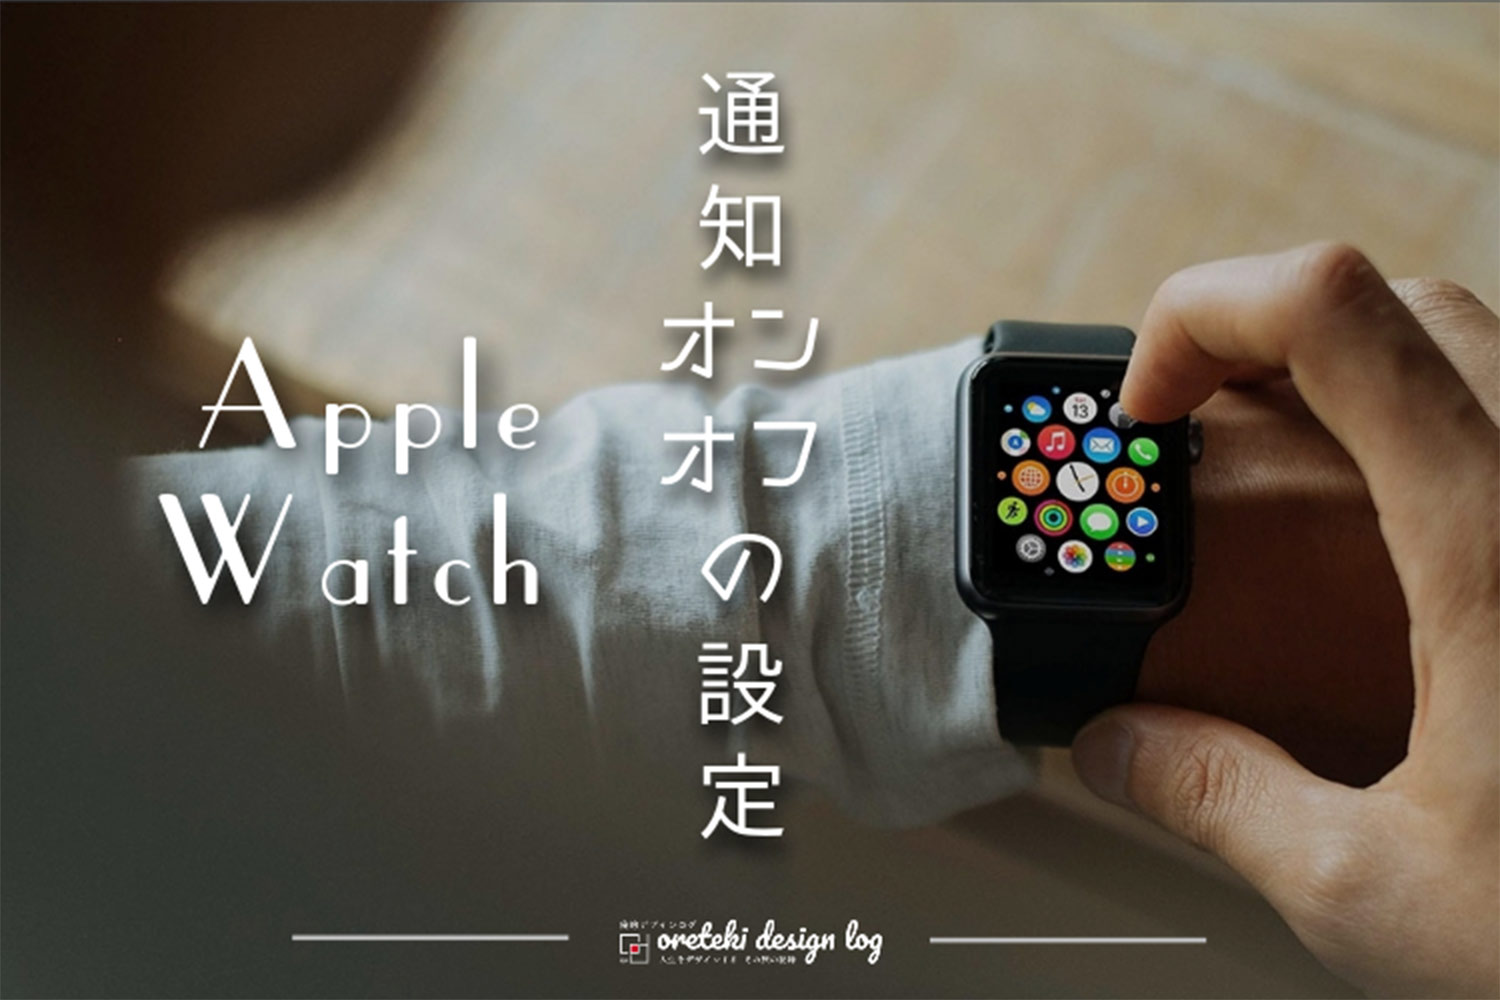 Apple Watch notification thumbnail